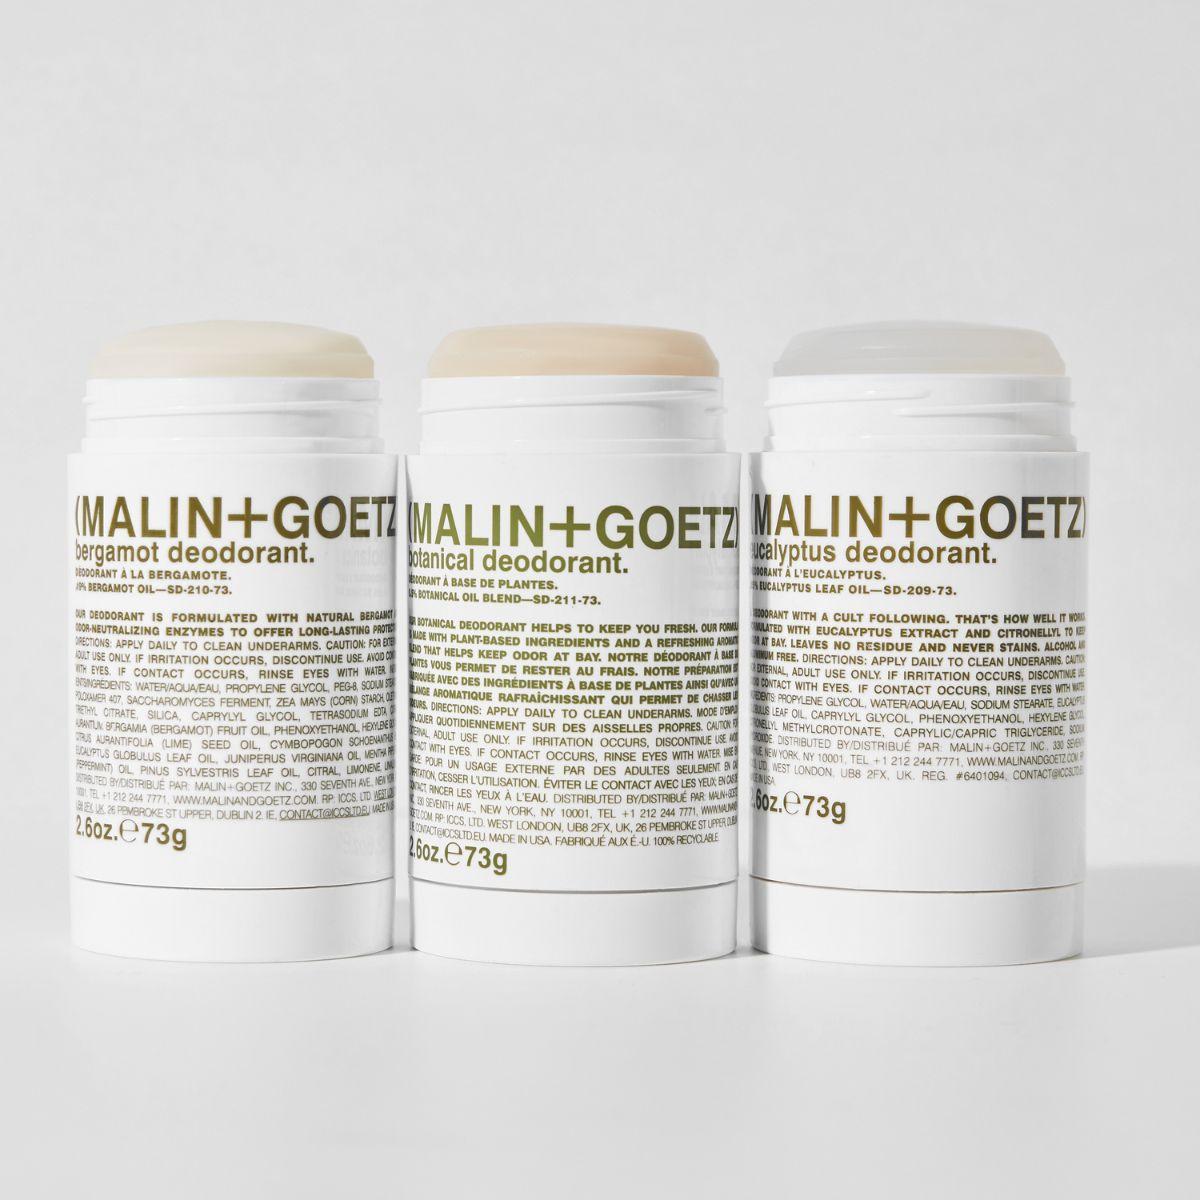 Image of deodorants collective by Malin + Goetz